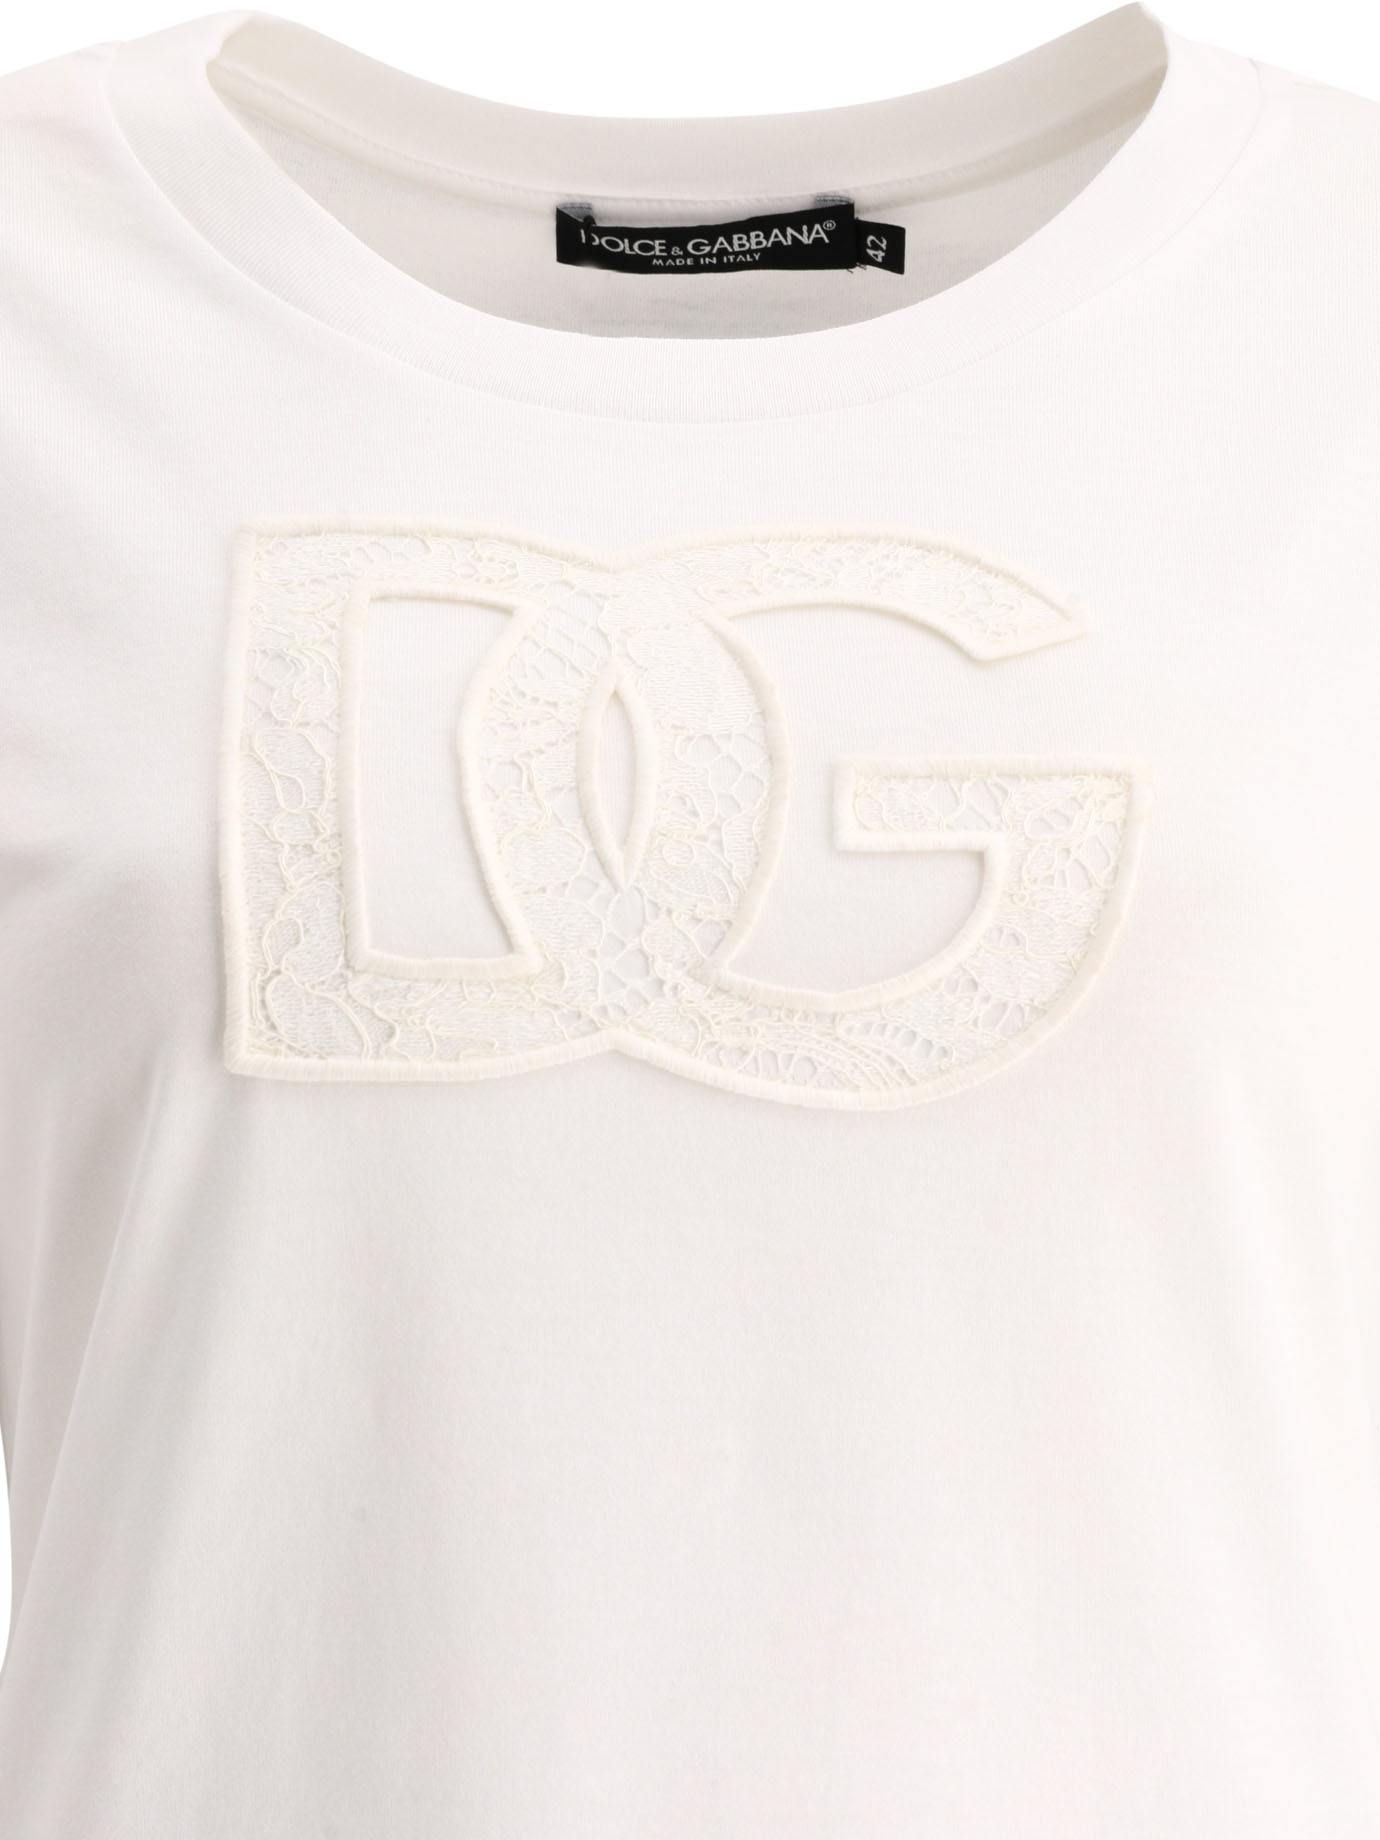 DOLCE & GABBANA T-shirt with logo patch